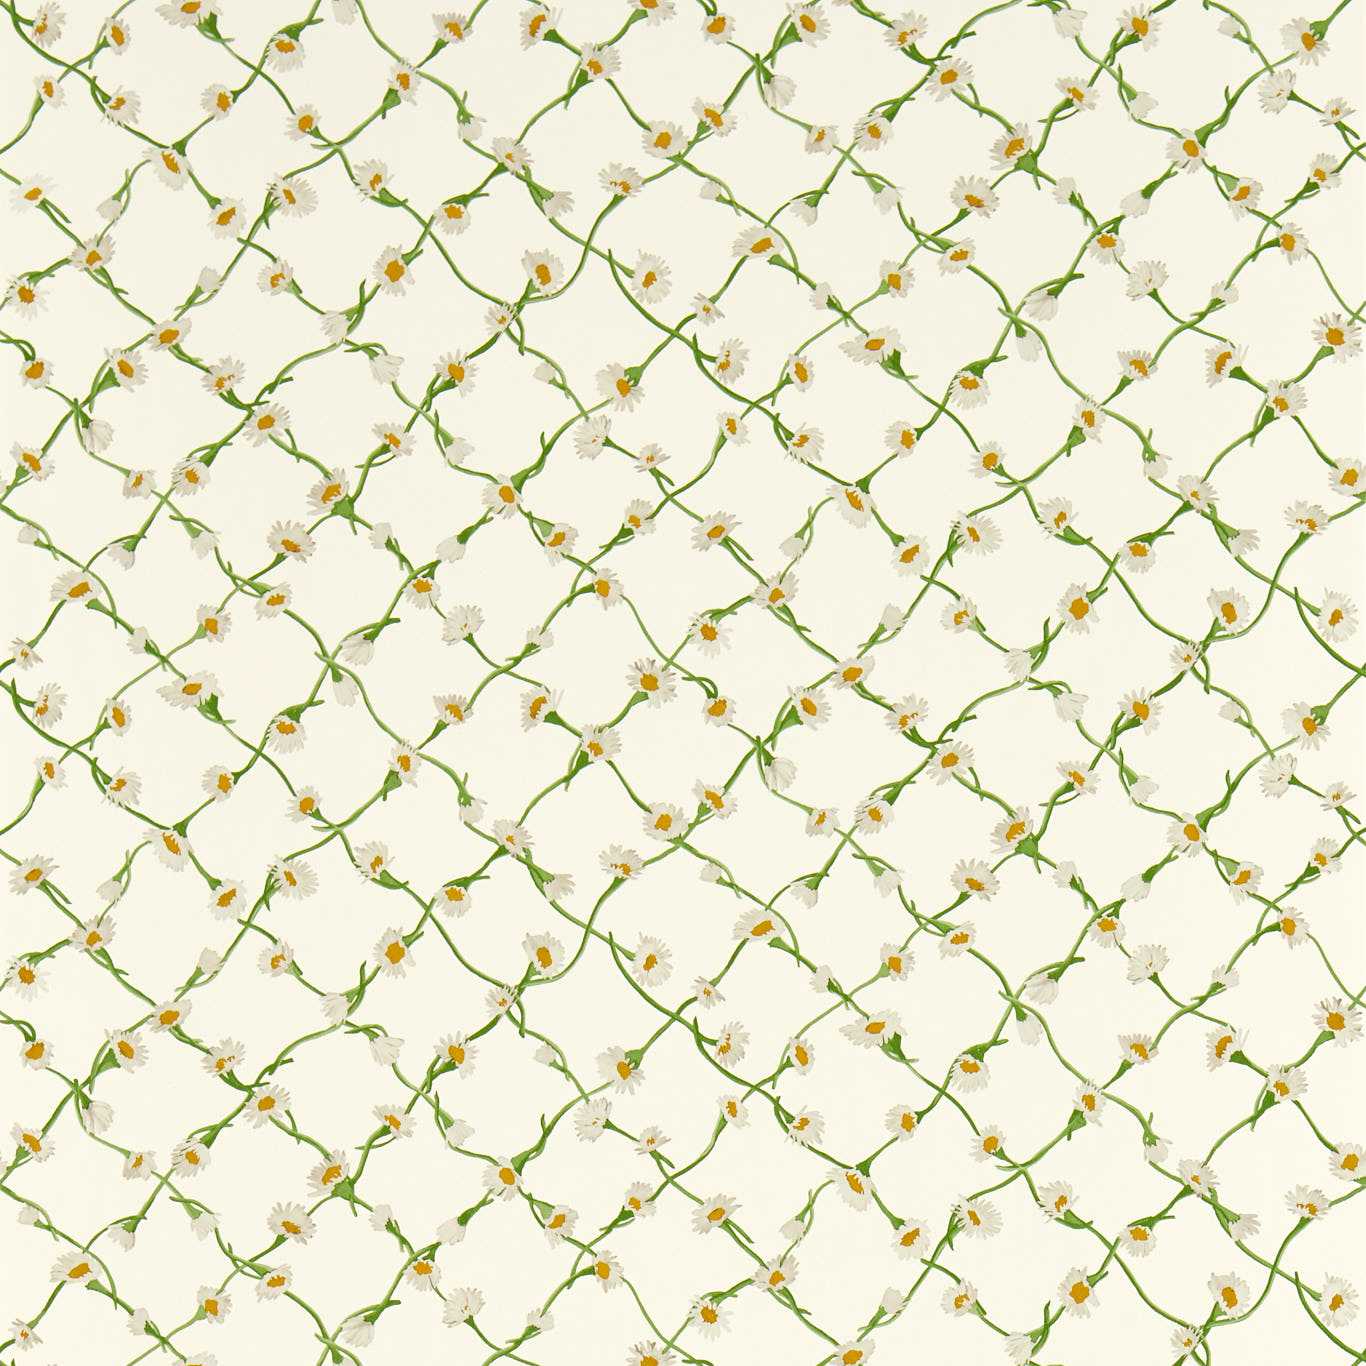 Daisy Trellis Emerald/Pearl Wallpaper by HAR